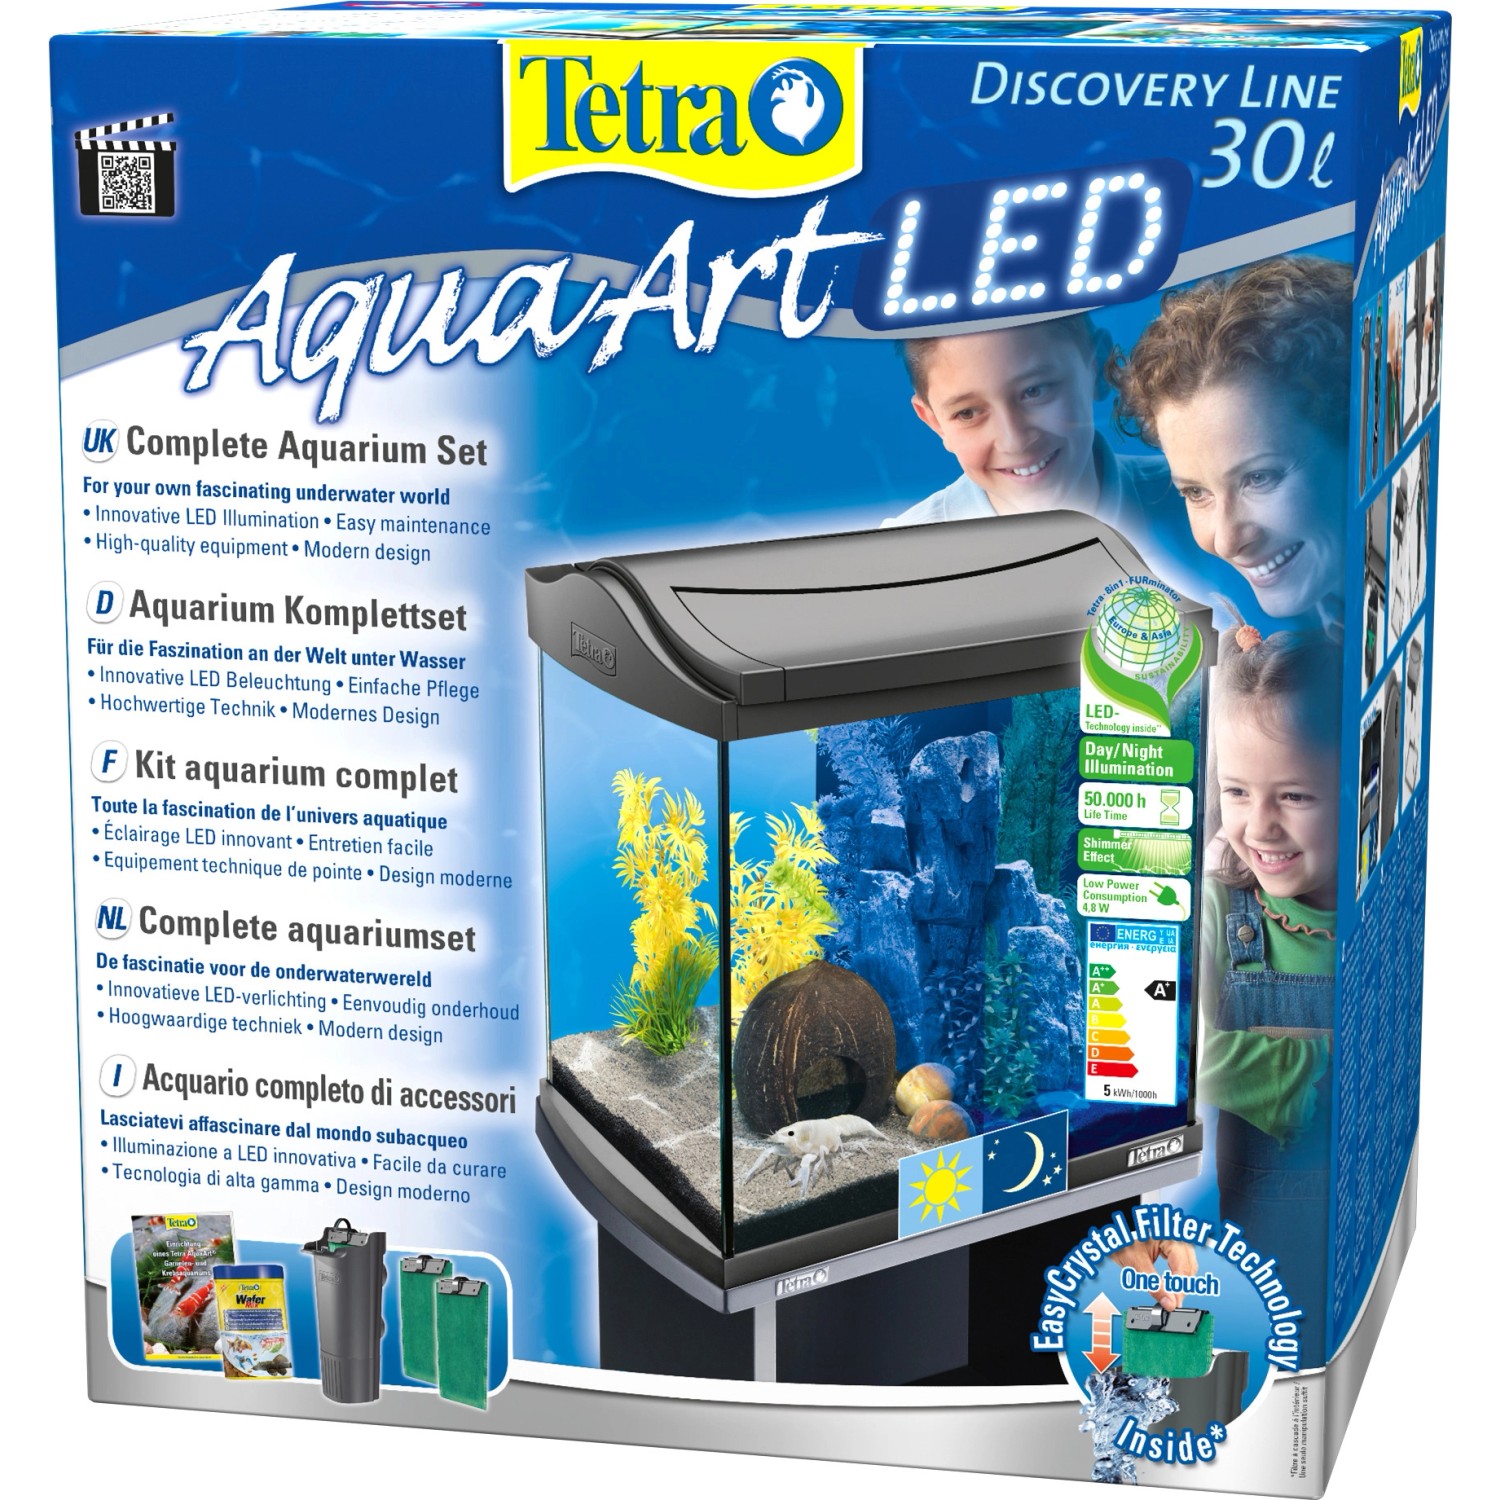 Tetra Aquarium-Set AquaArt Discovery Line LED 30 l Anthrazit kaufen bei OBI